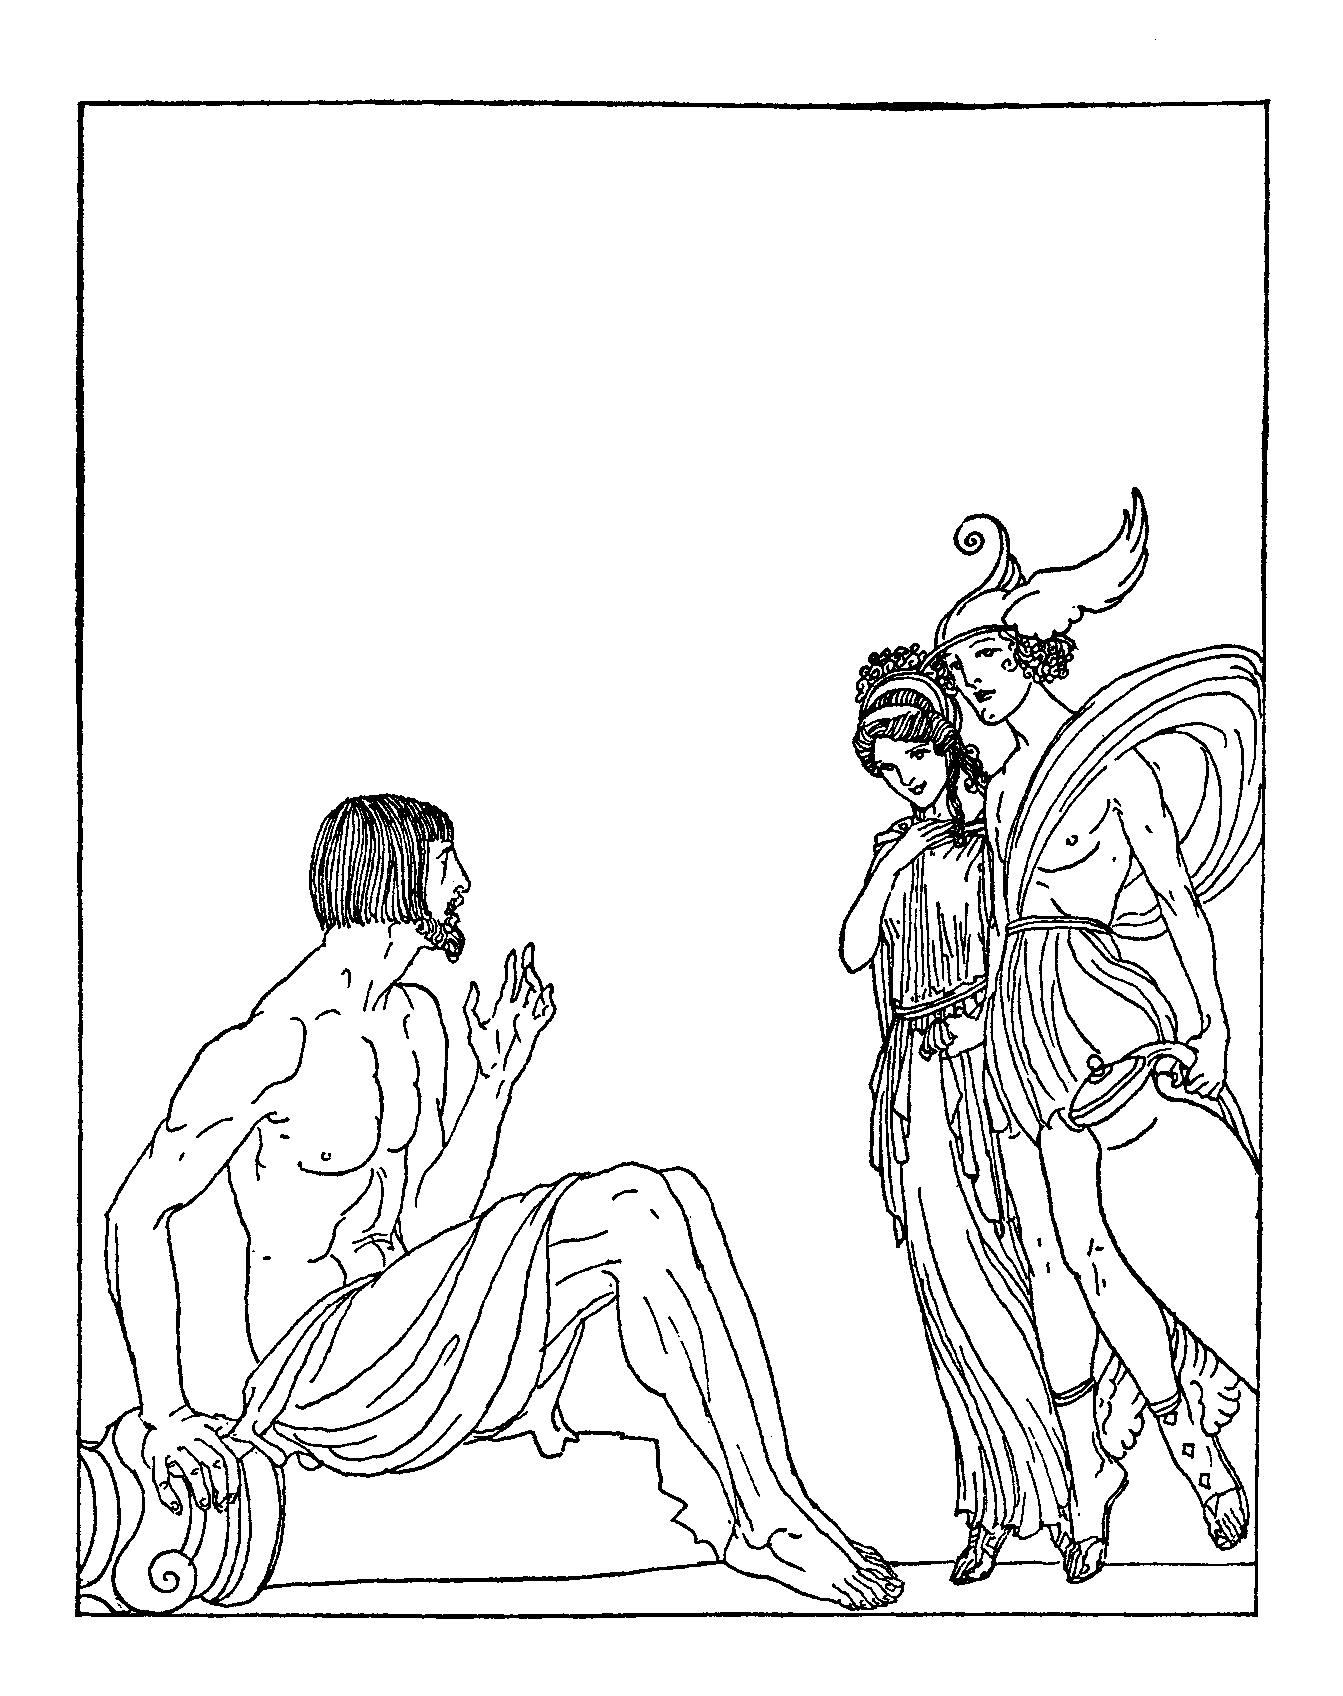 [Illustration] from Golden Fleece by Padraic Colum